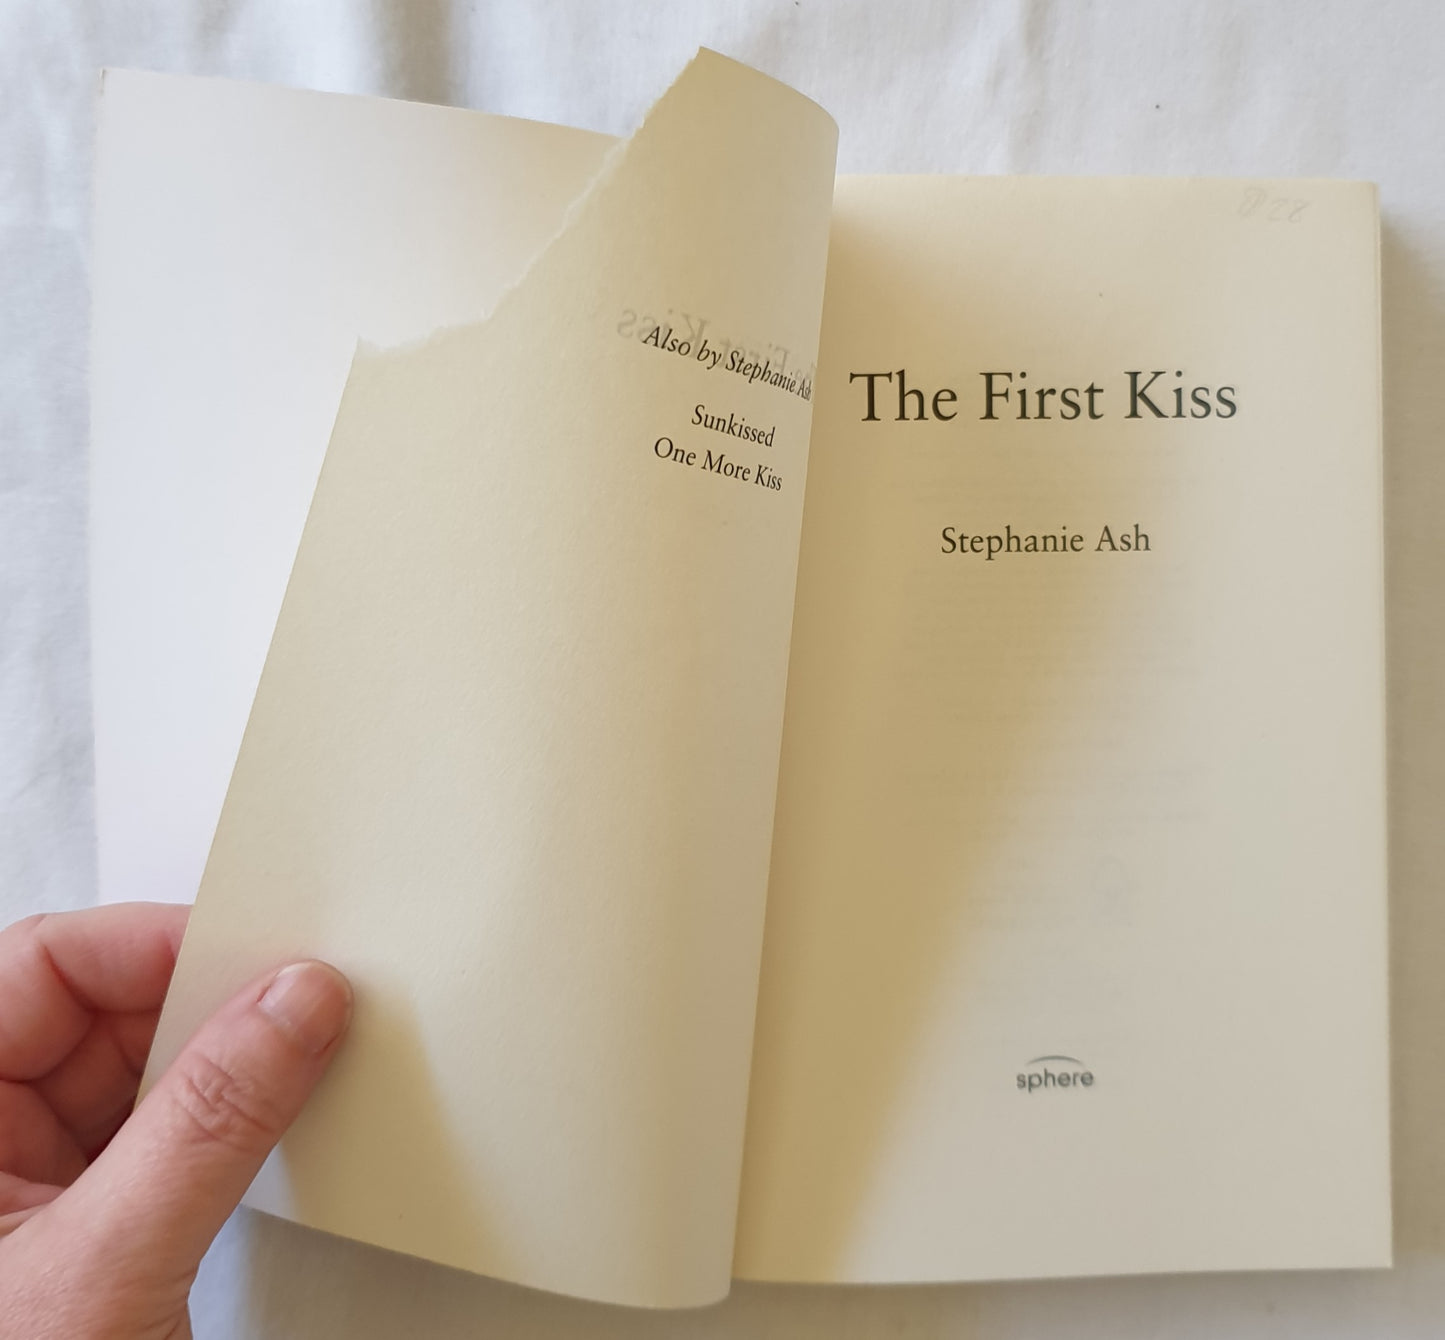 The First Kiss by Stephanie Ash